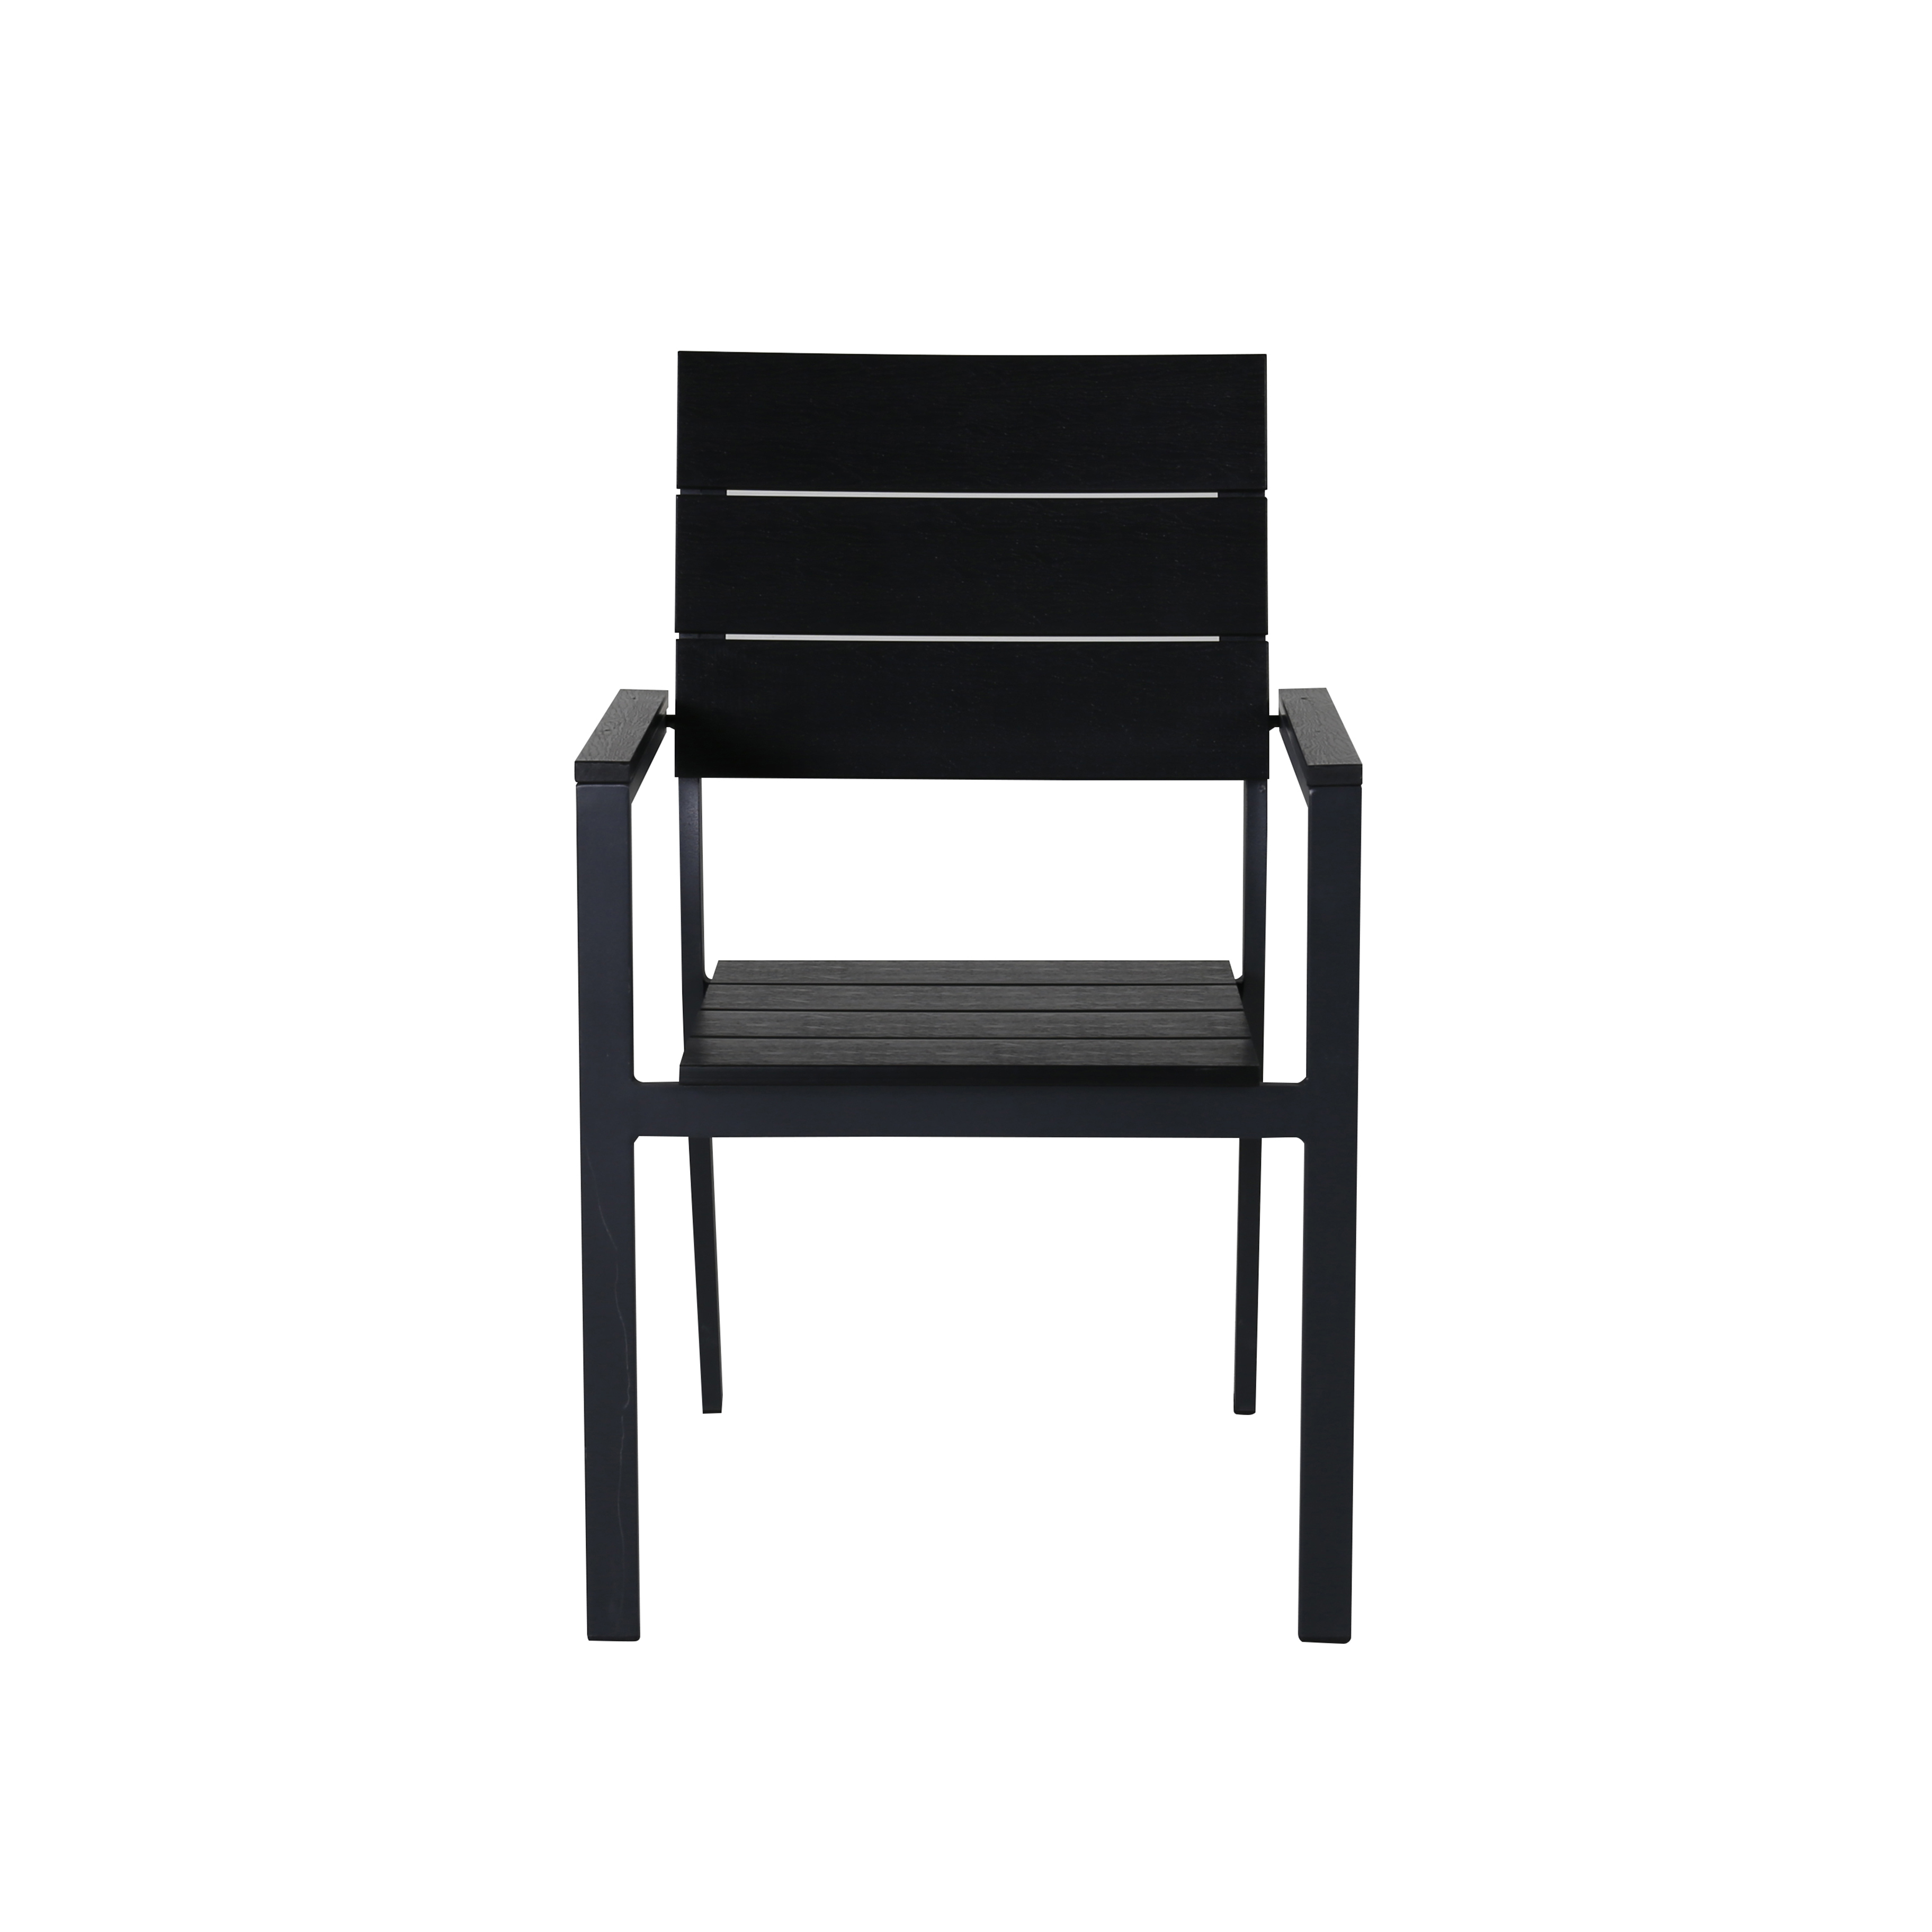 Venture Design - Levels Garden Chair - Alu/Aintwood - Black/Black (4130-620)